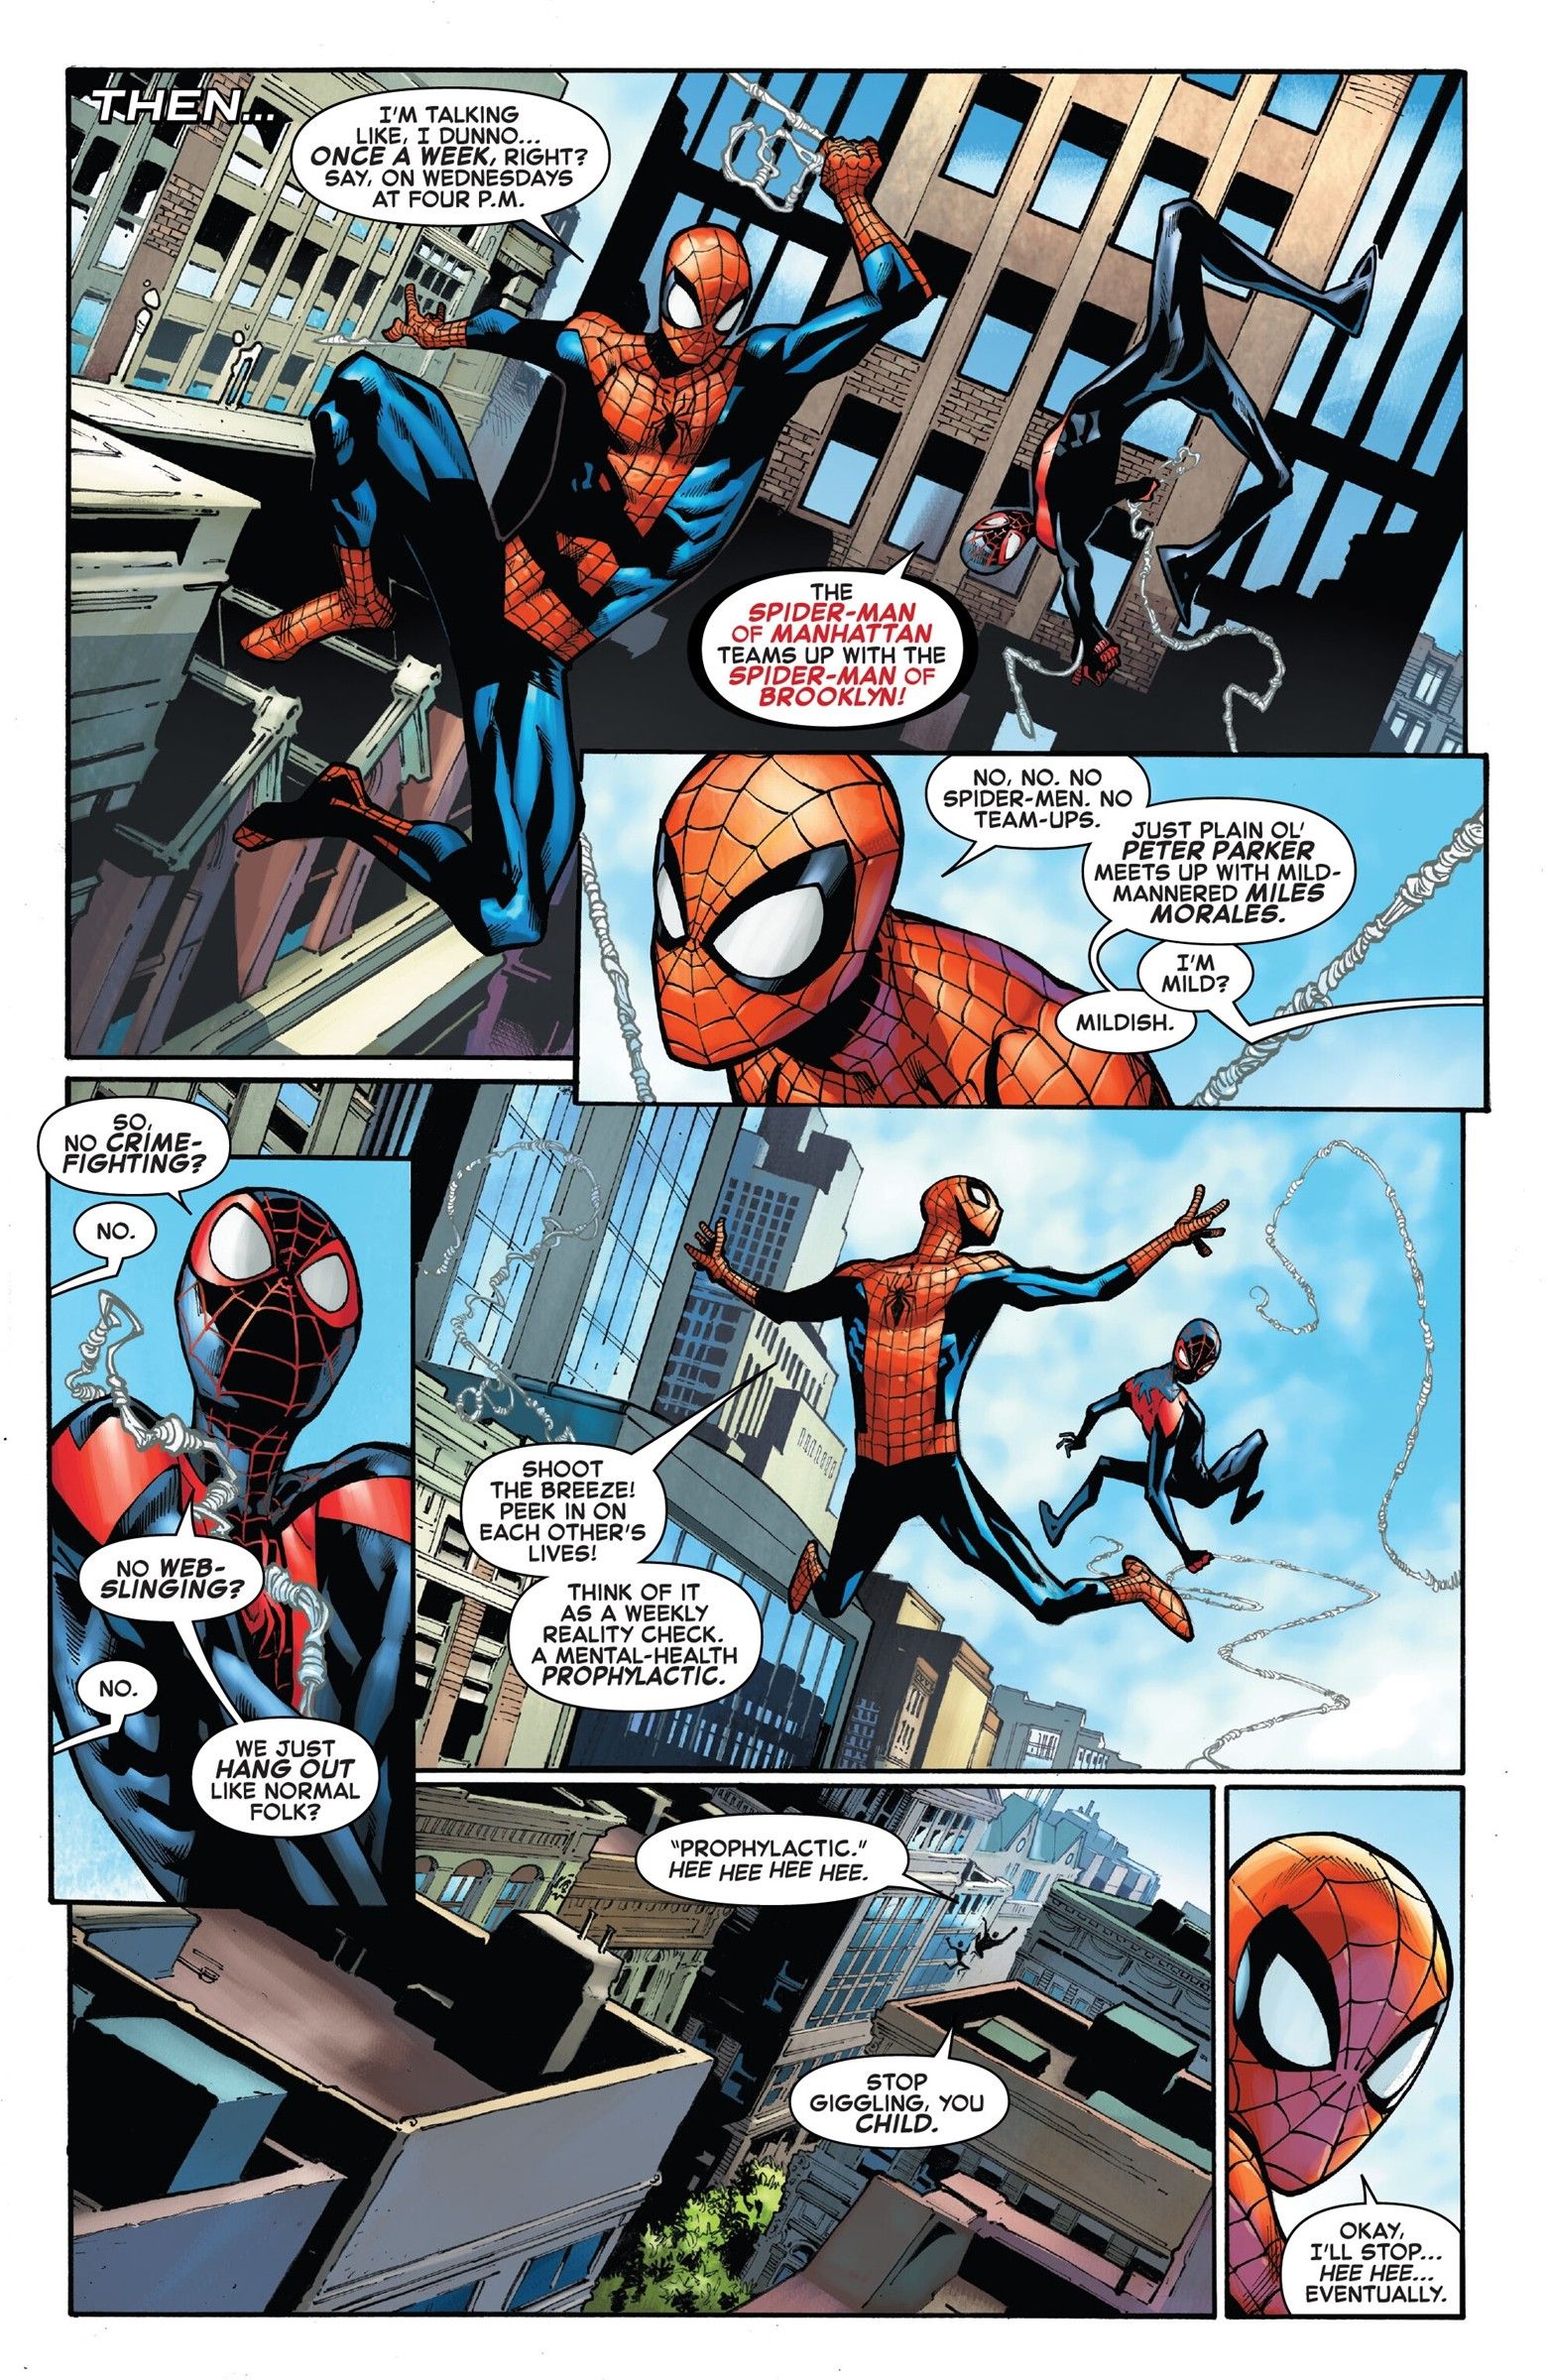 Spectacular Spider-Men #1 Begins a Joyous New Era of Peter & Miles’ Relationship (Review)